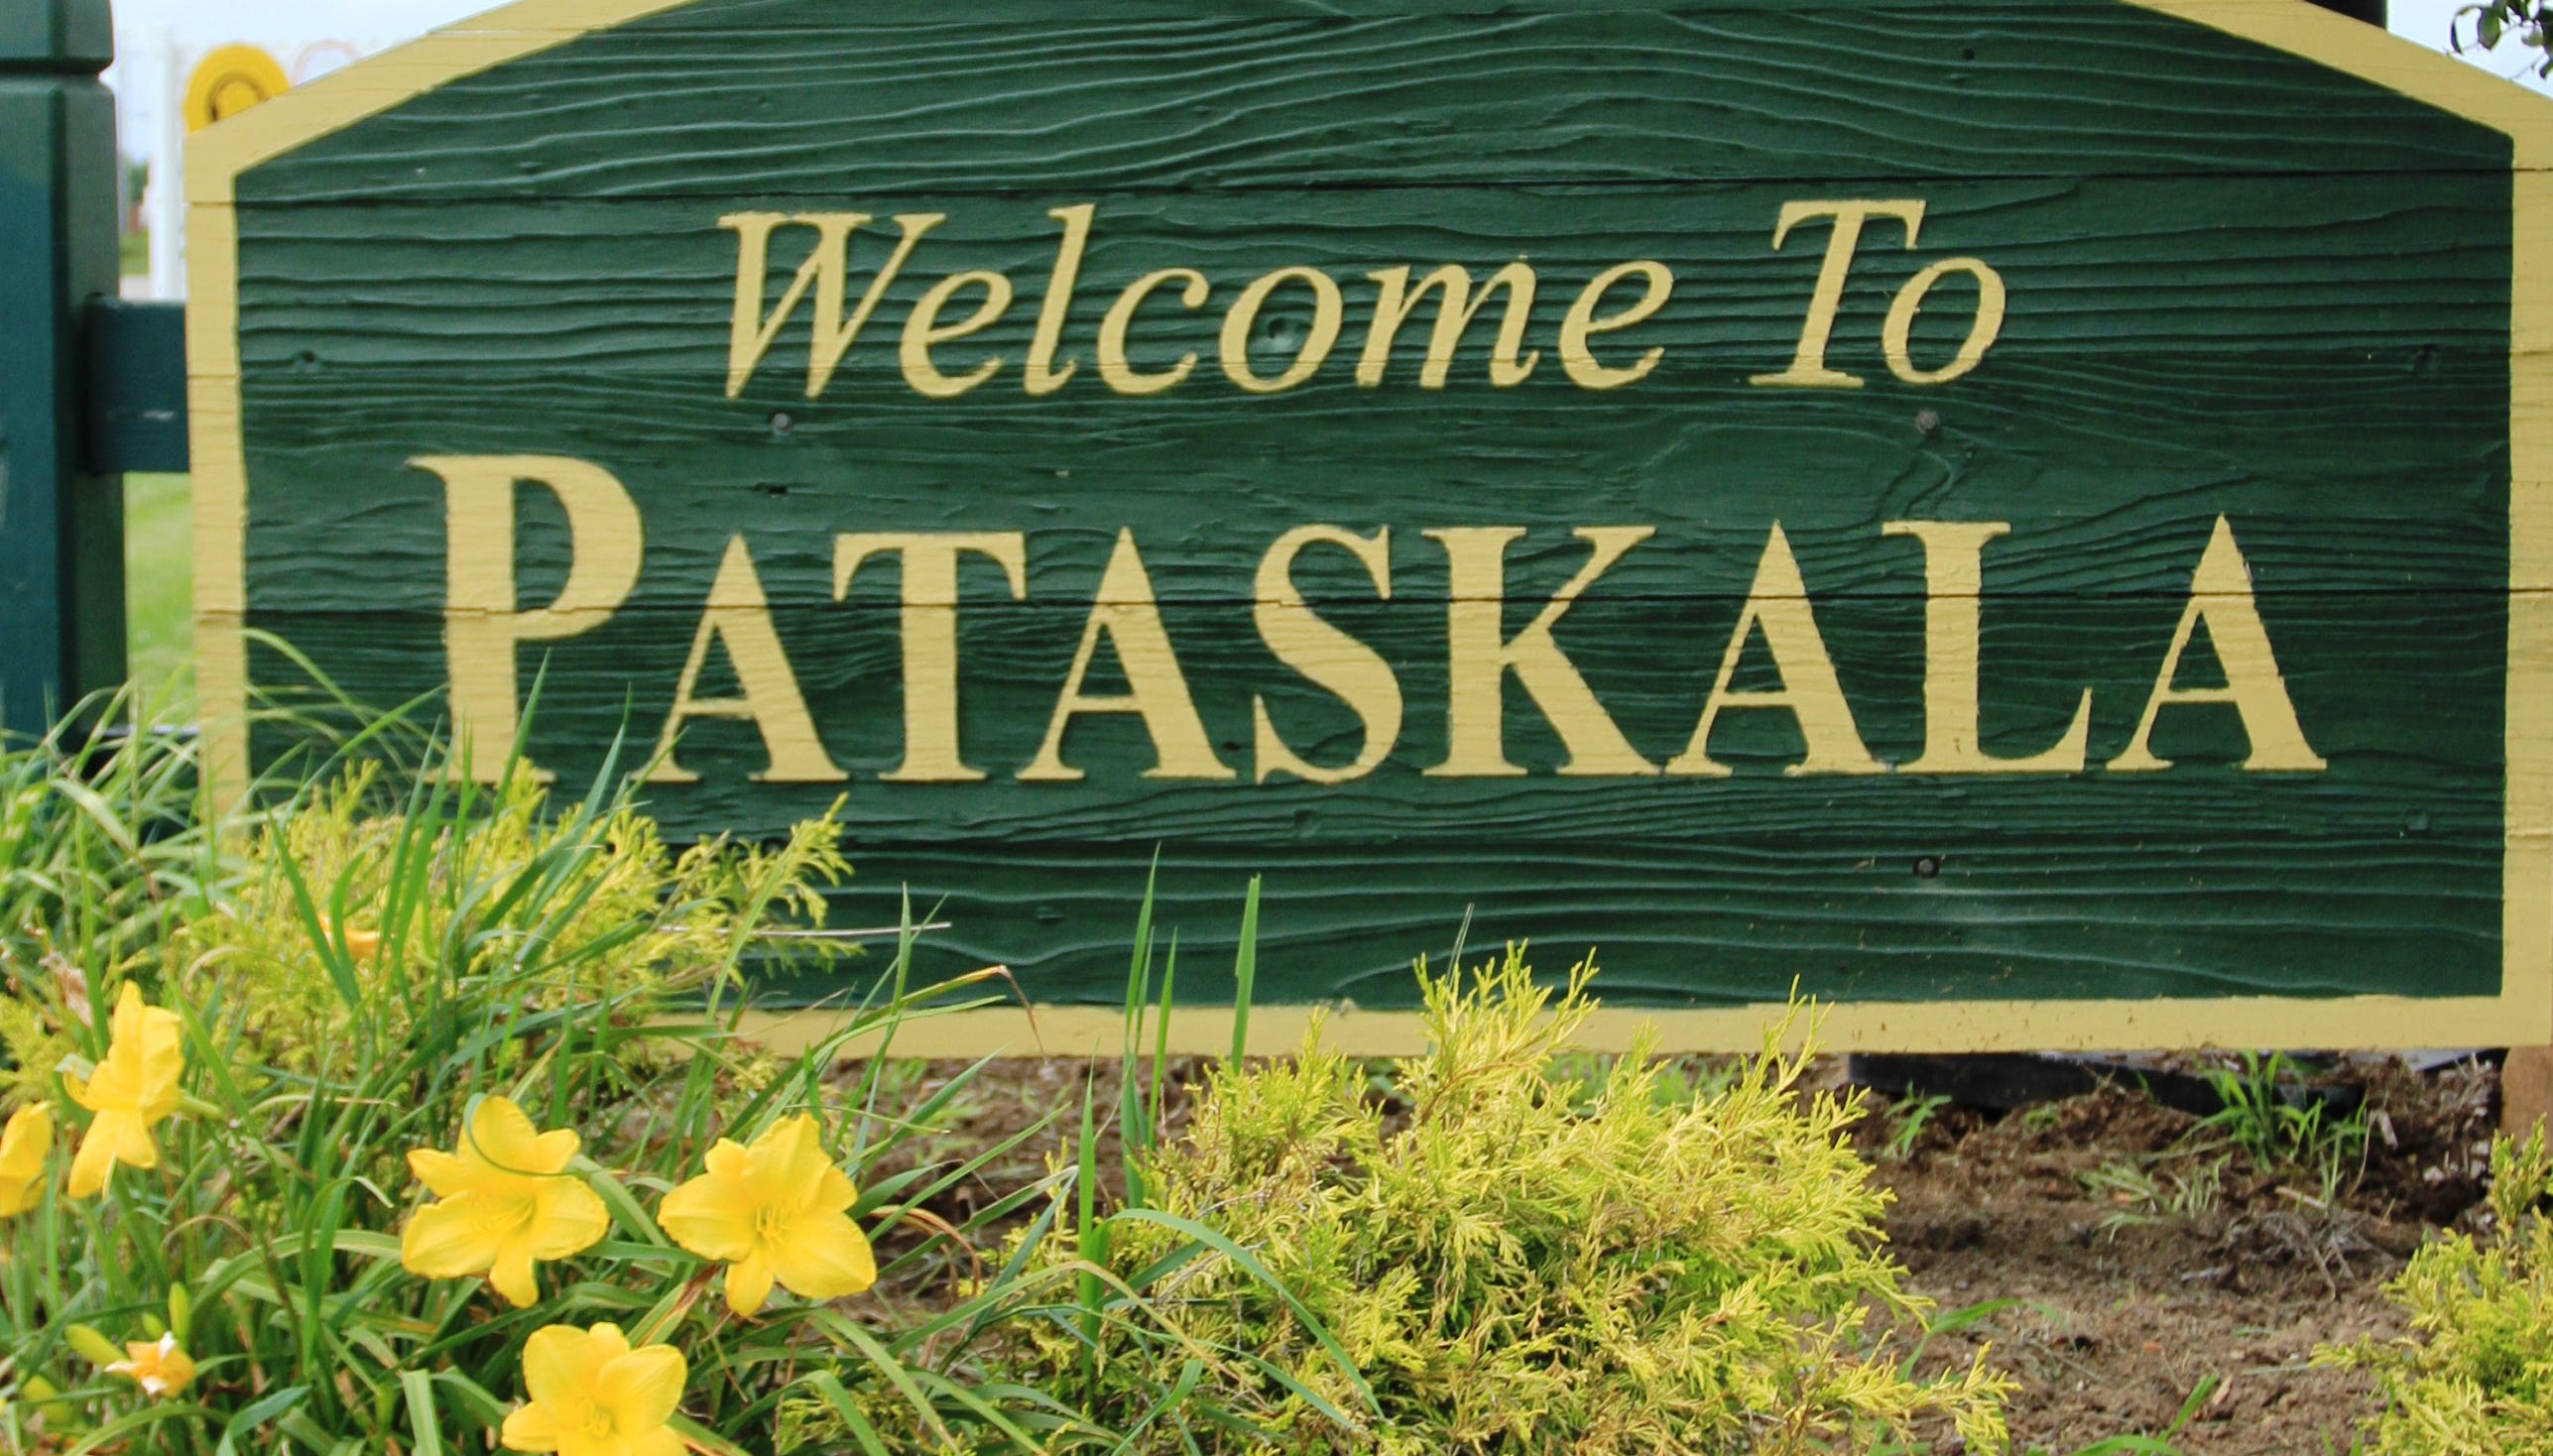  City of Pataskala public notices for Nov. 24 